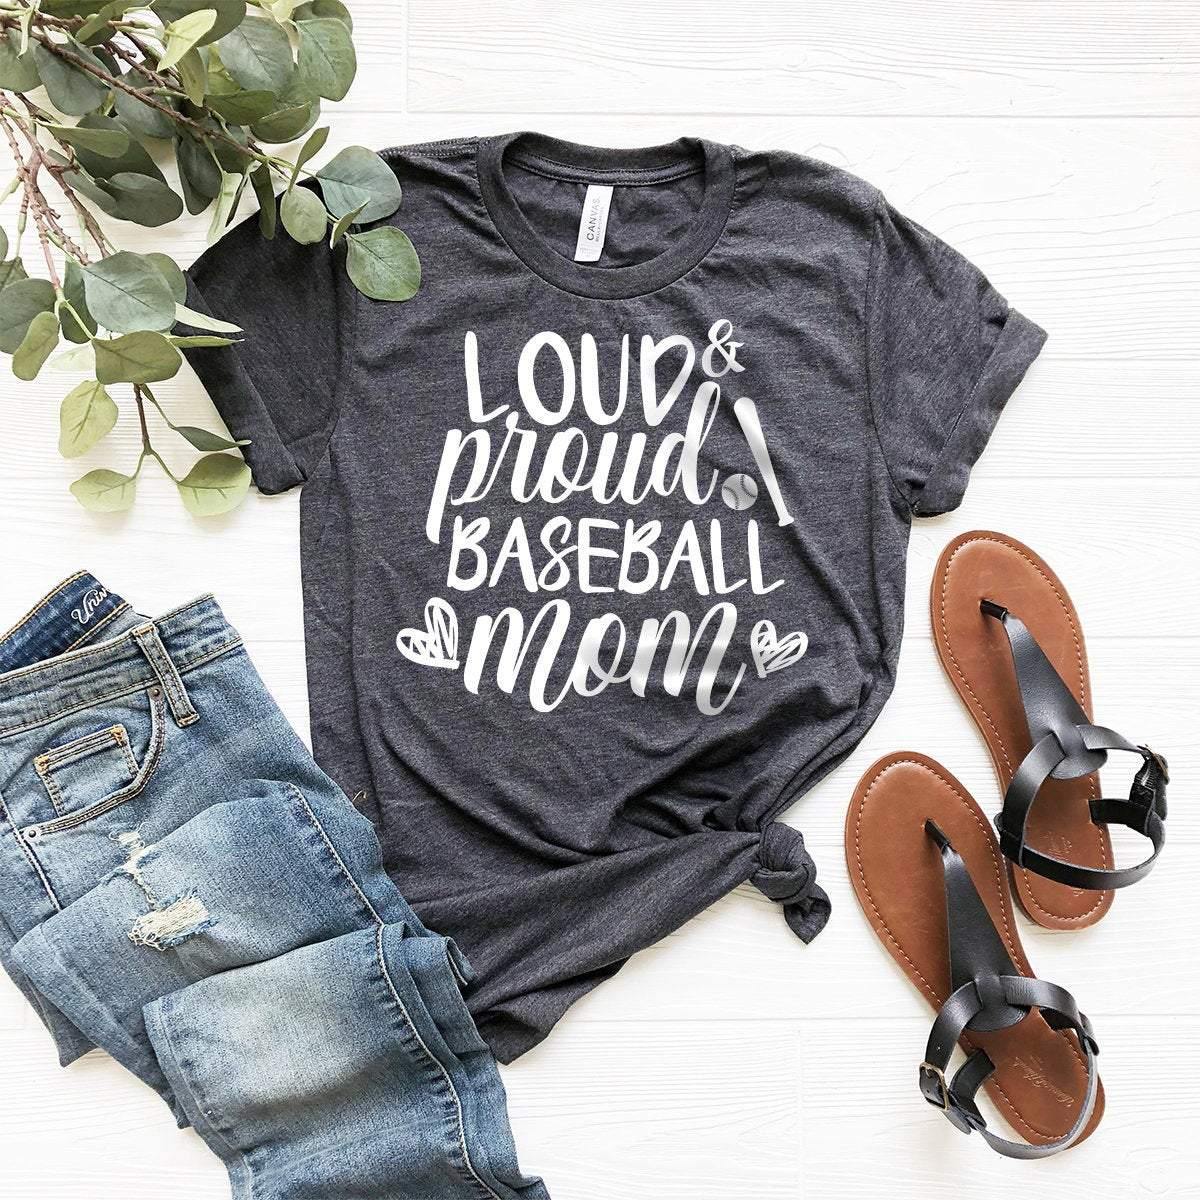 Baseball Mom Tshirt, Loud And Proud Baseball Mom Tee, Baseball Mom Life Shirt, Baseball Game Day Tee, Softball Mom Shirt, Baseball Mom Shirt - Fastdeliverytees.com